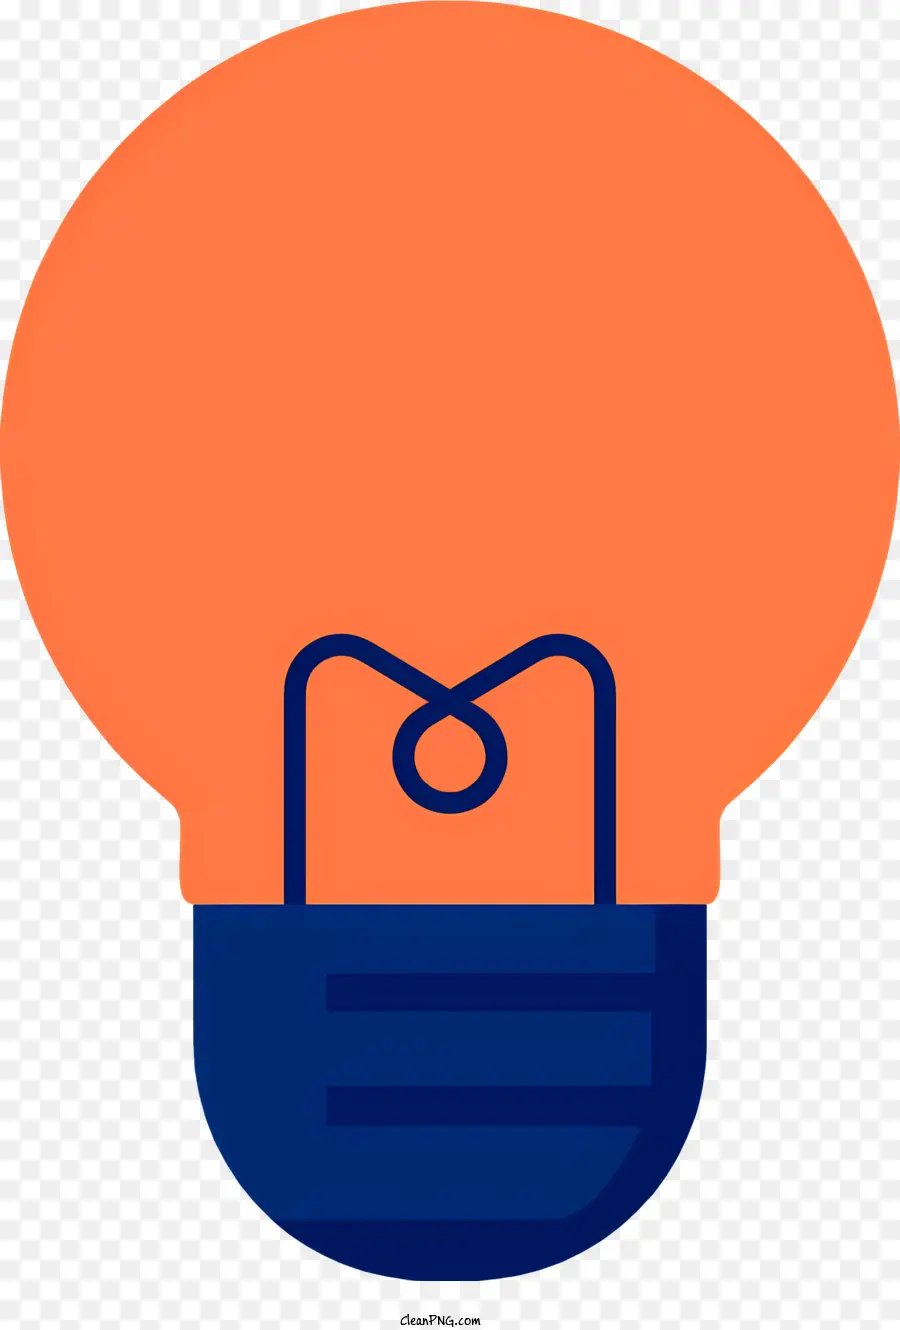 icona lampadina blu lampadina trasparente involucro di lampadina di apertura rettangolare - Lampadina blu avvolta in involucro di plastica